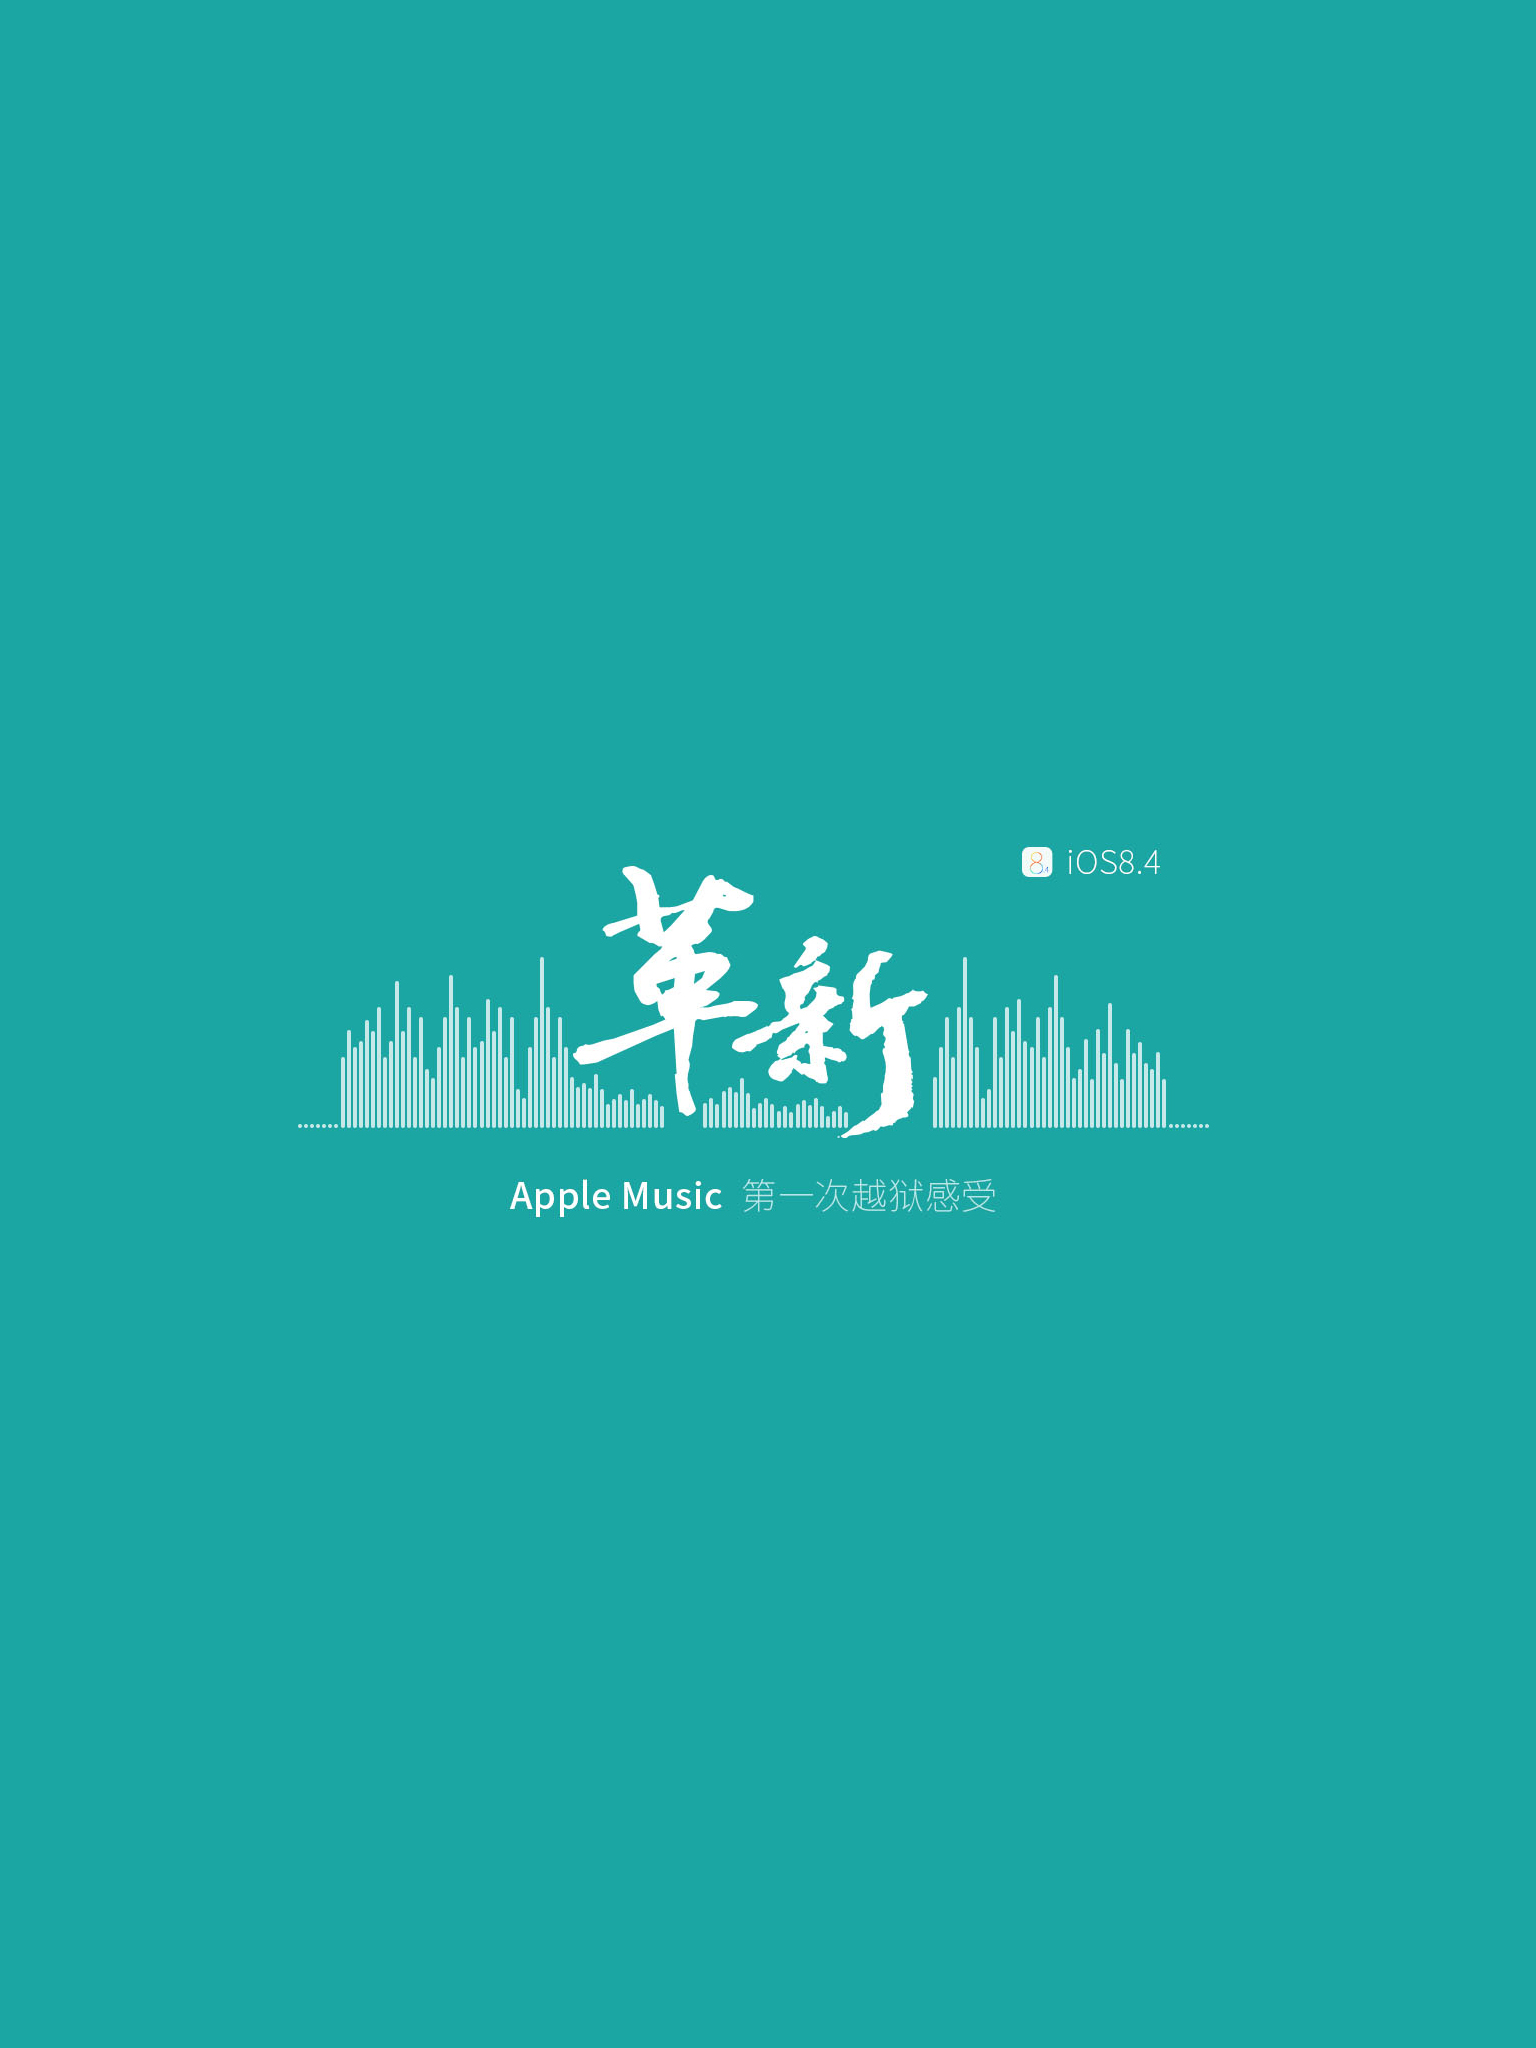 Apple Music Wallpaper For iPhone iPad And Desktop